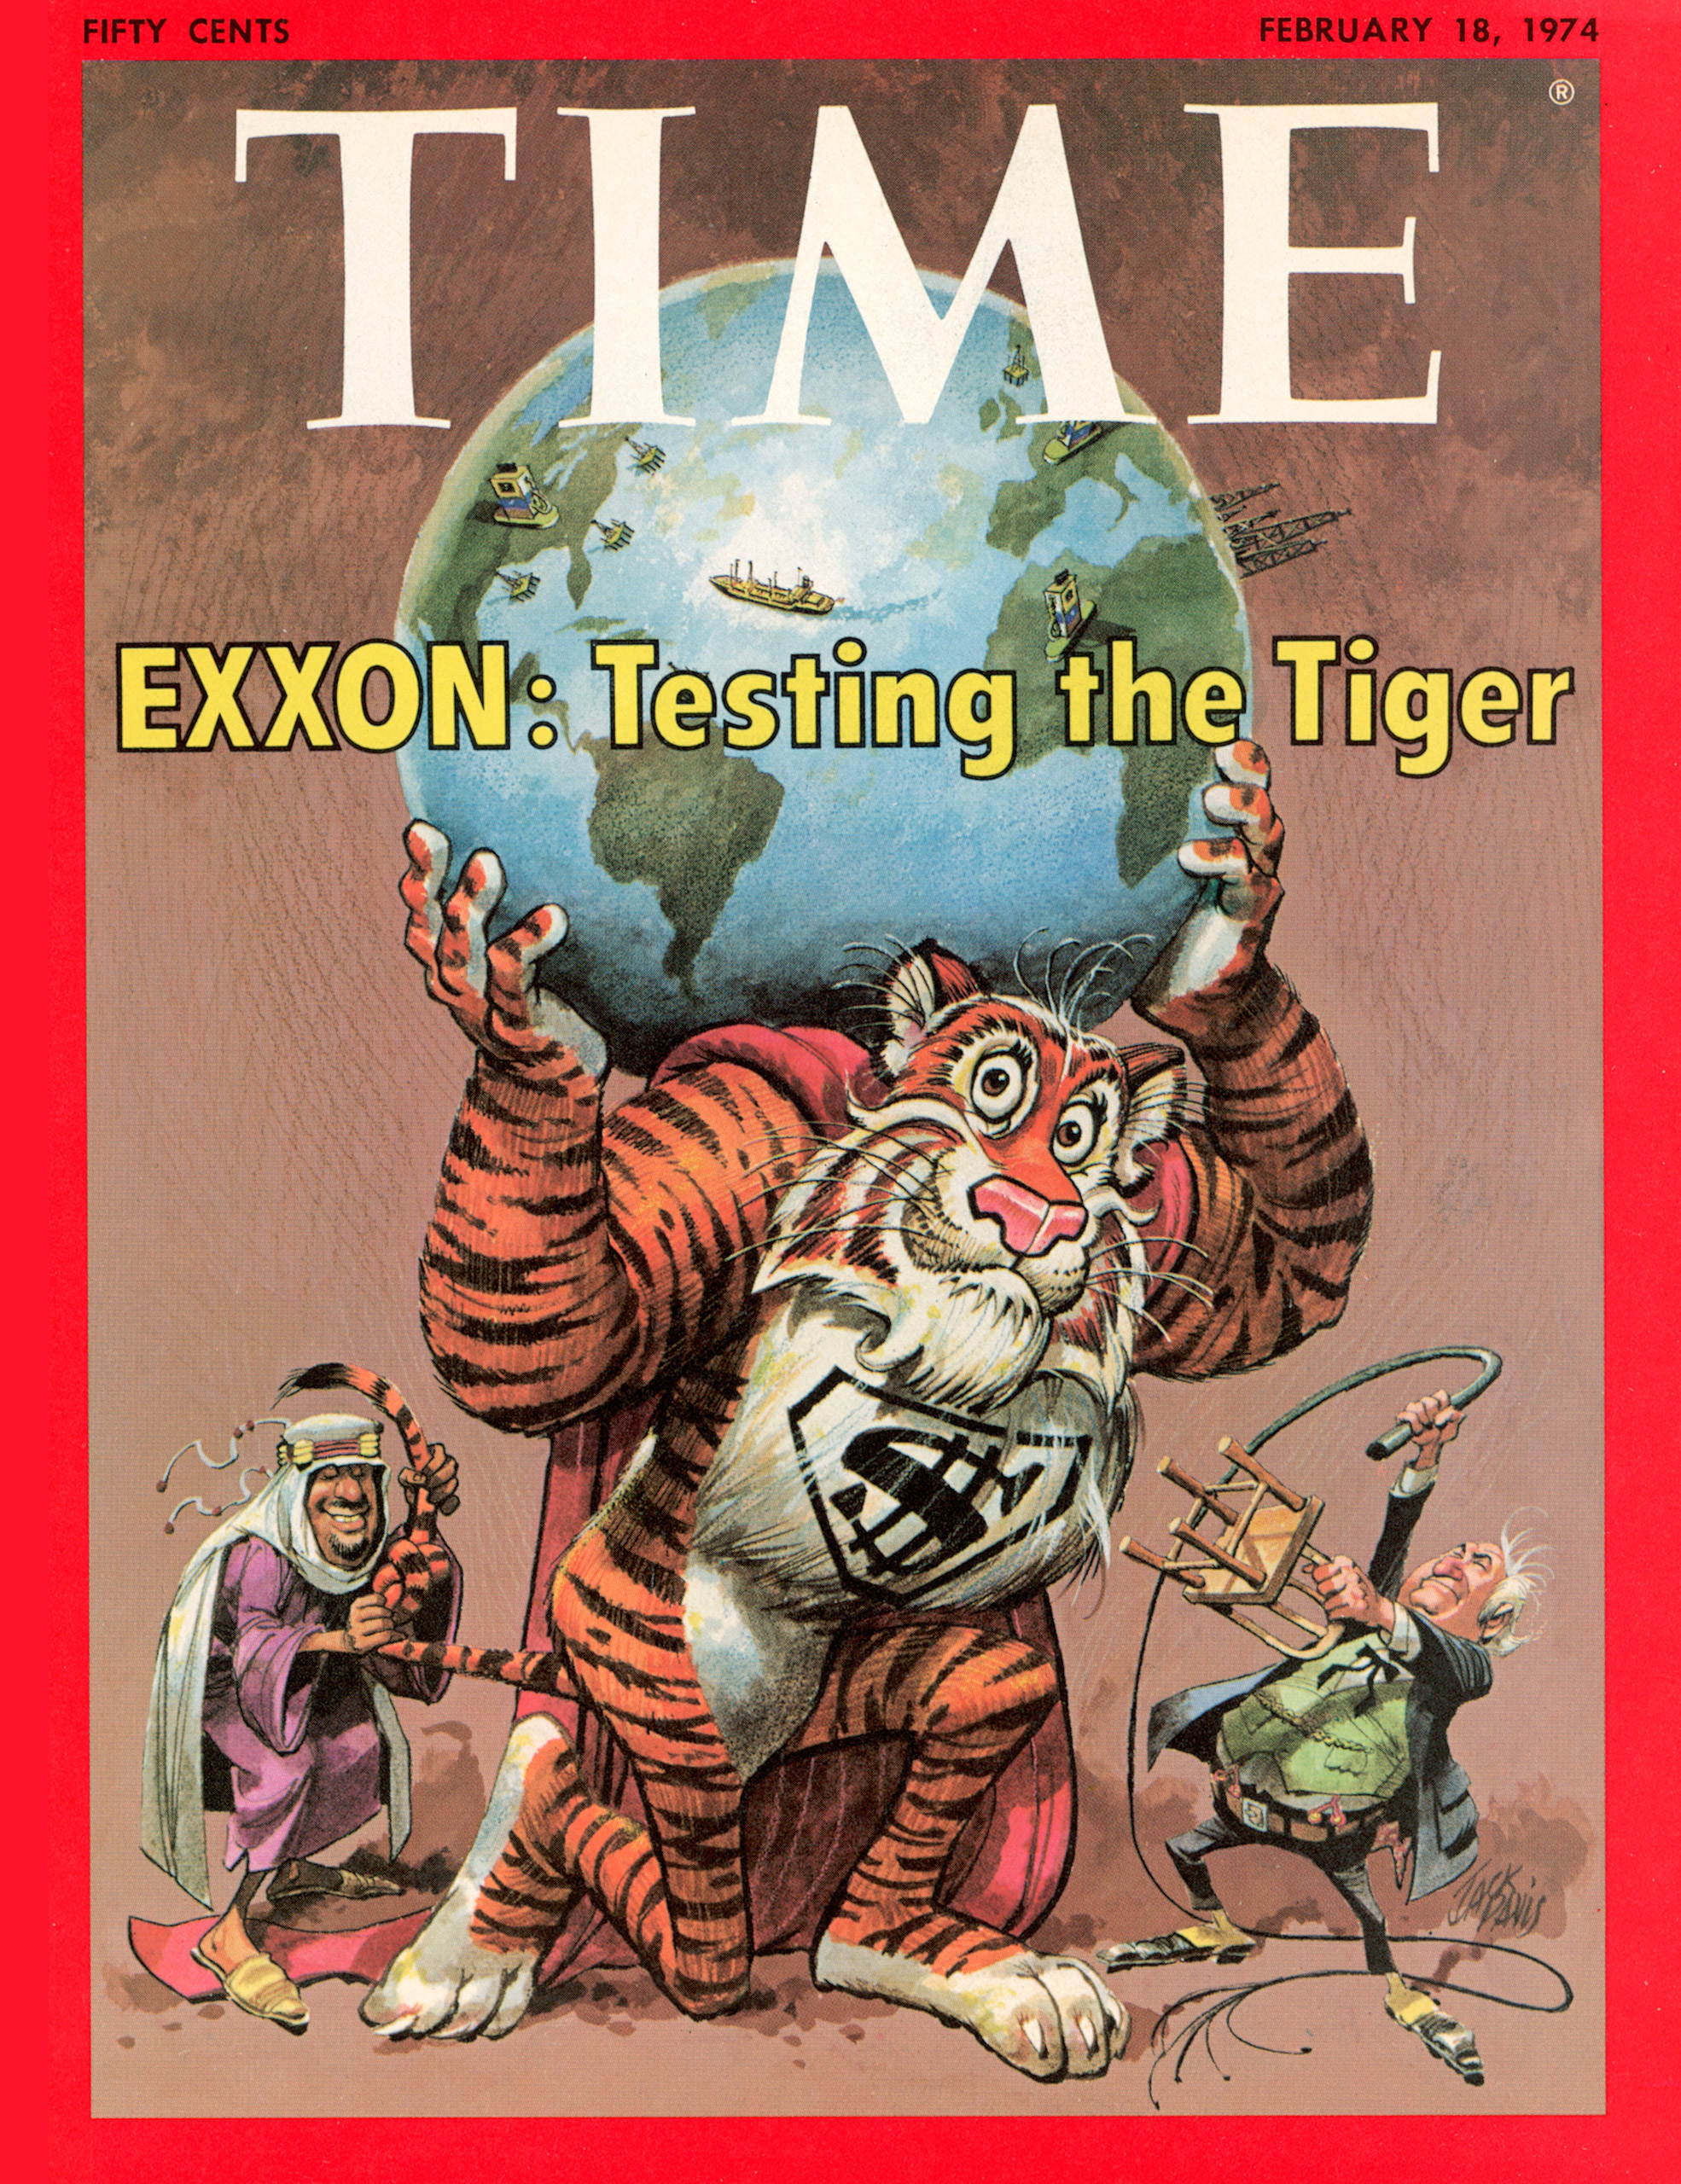 Cartoonist Jack Davis cover of TIME magazine.